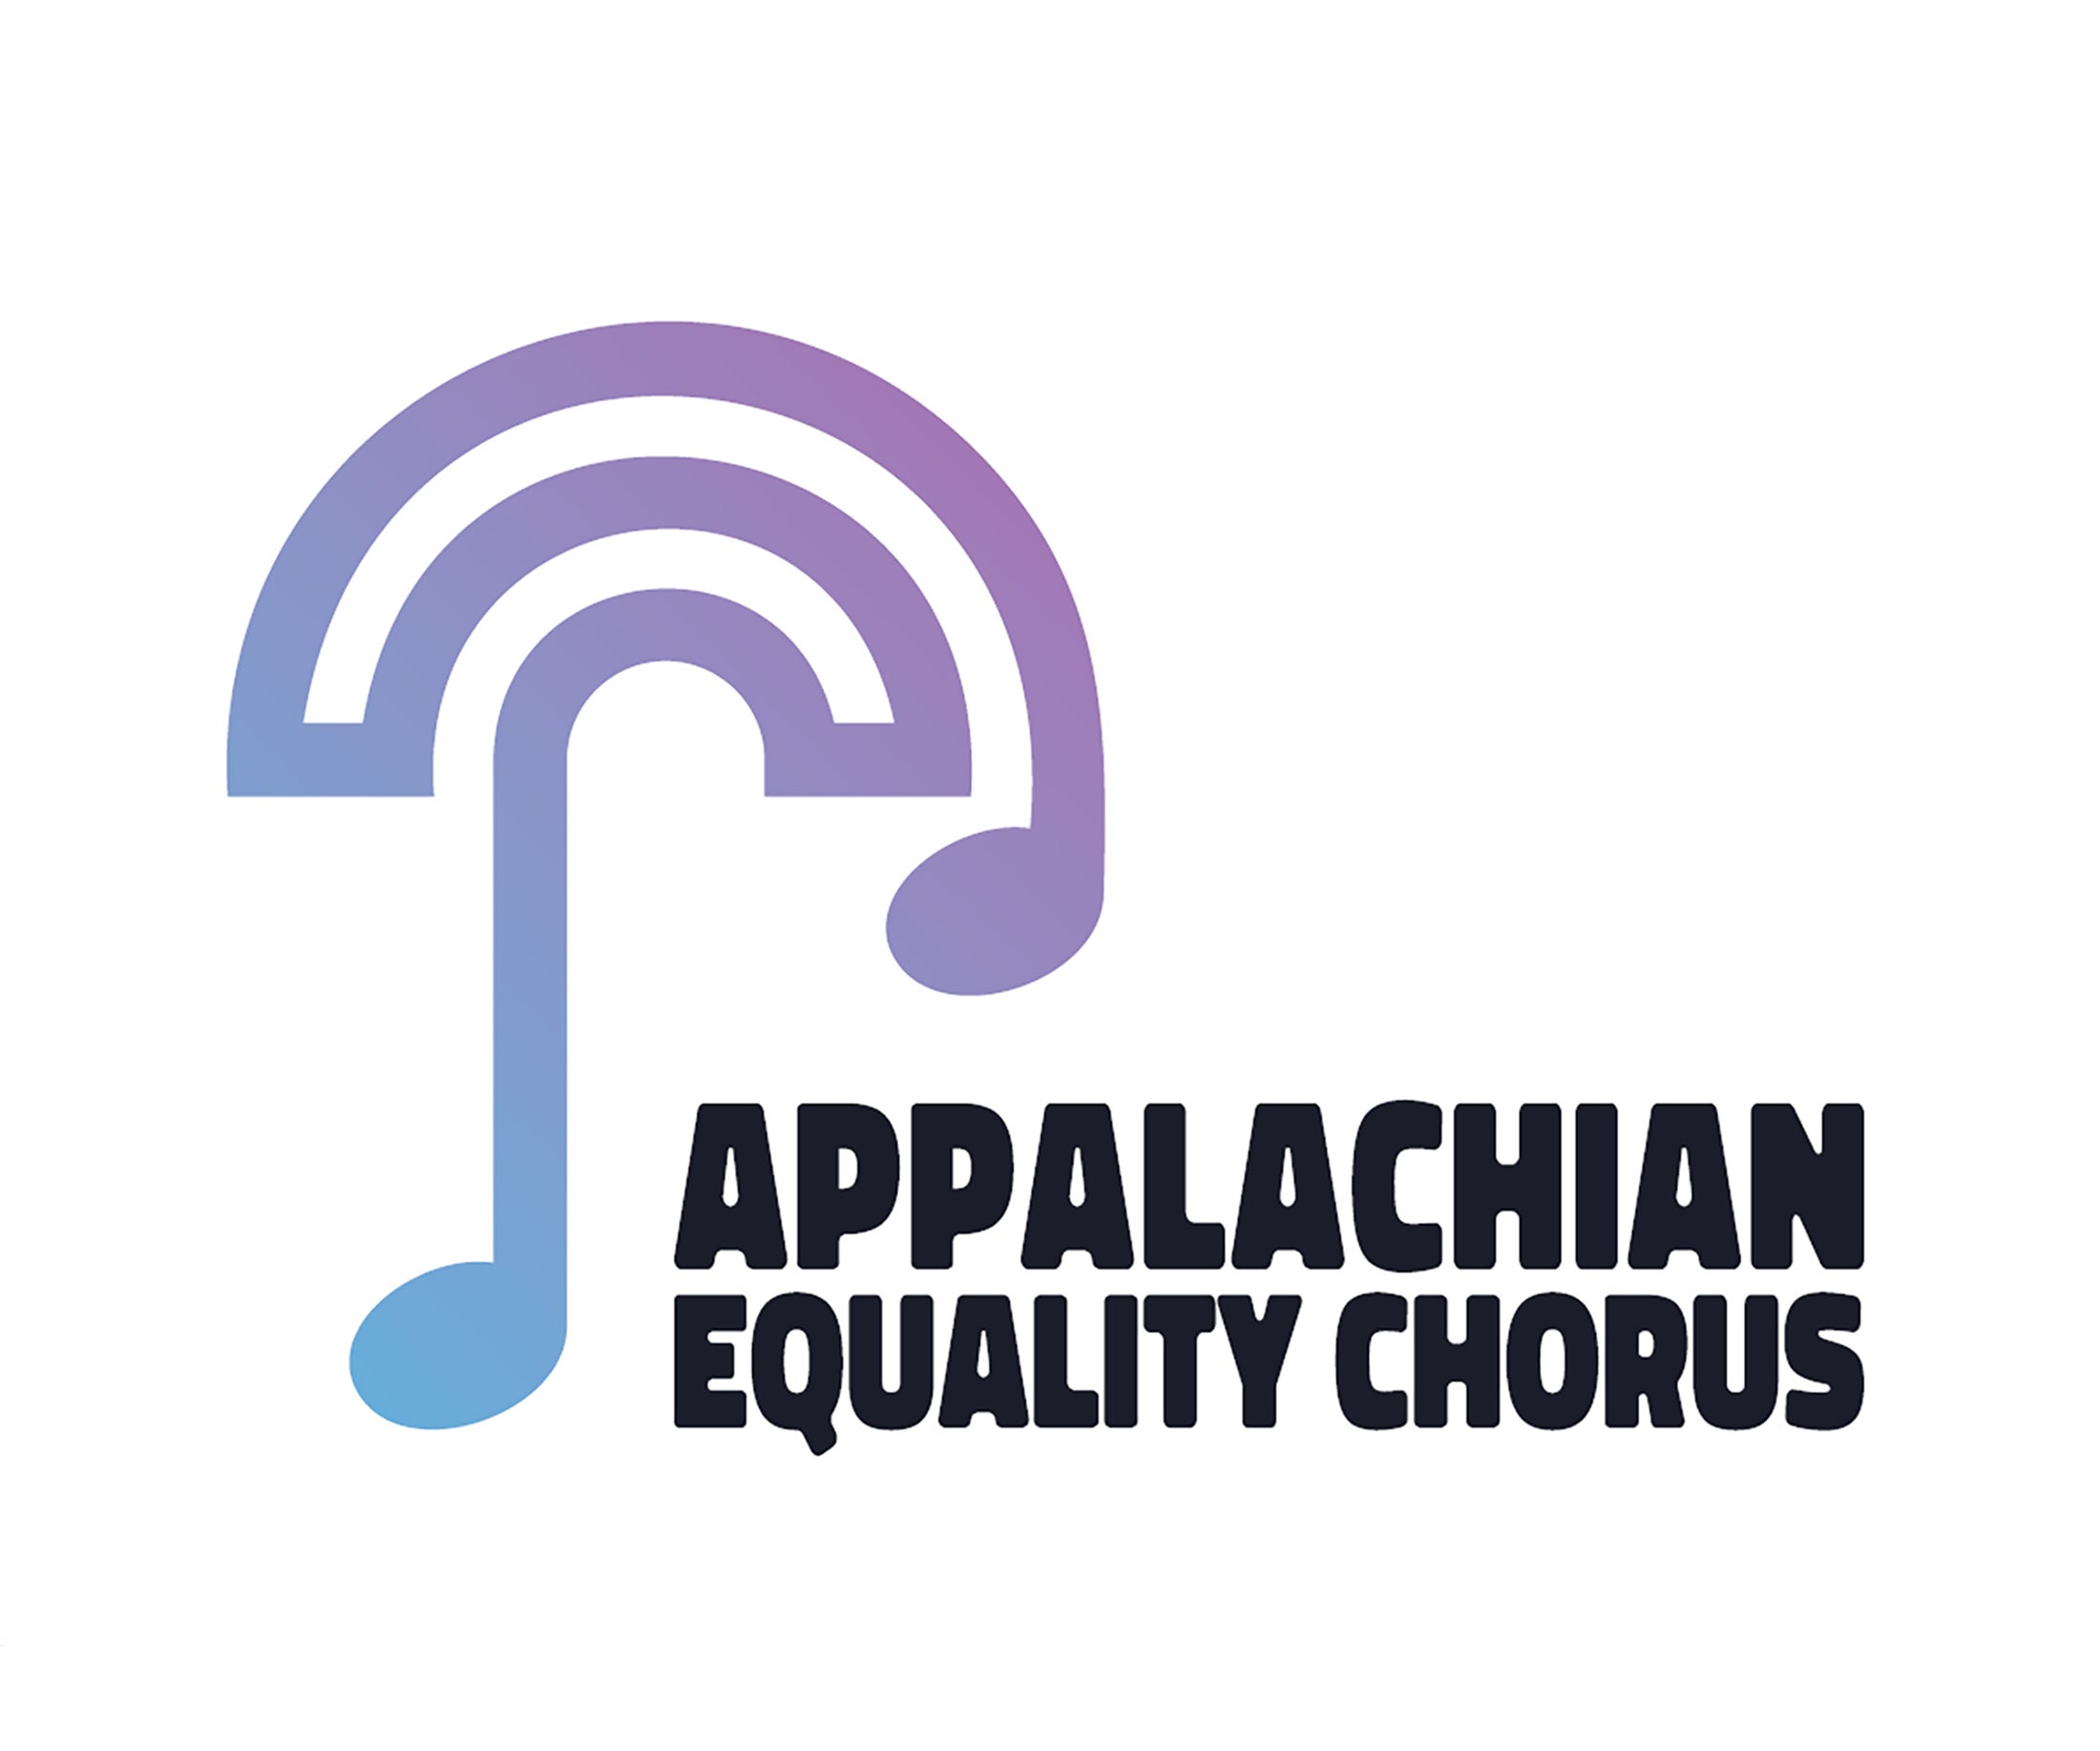 Appalachian Equality Chorus Presents "The Rainbow Runs Over Me"